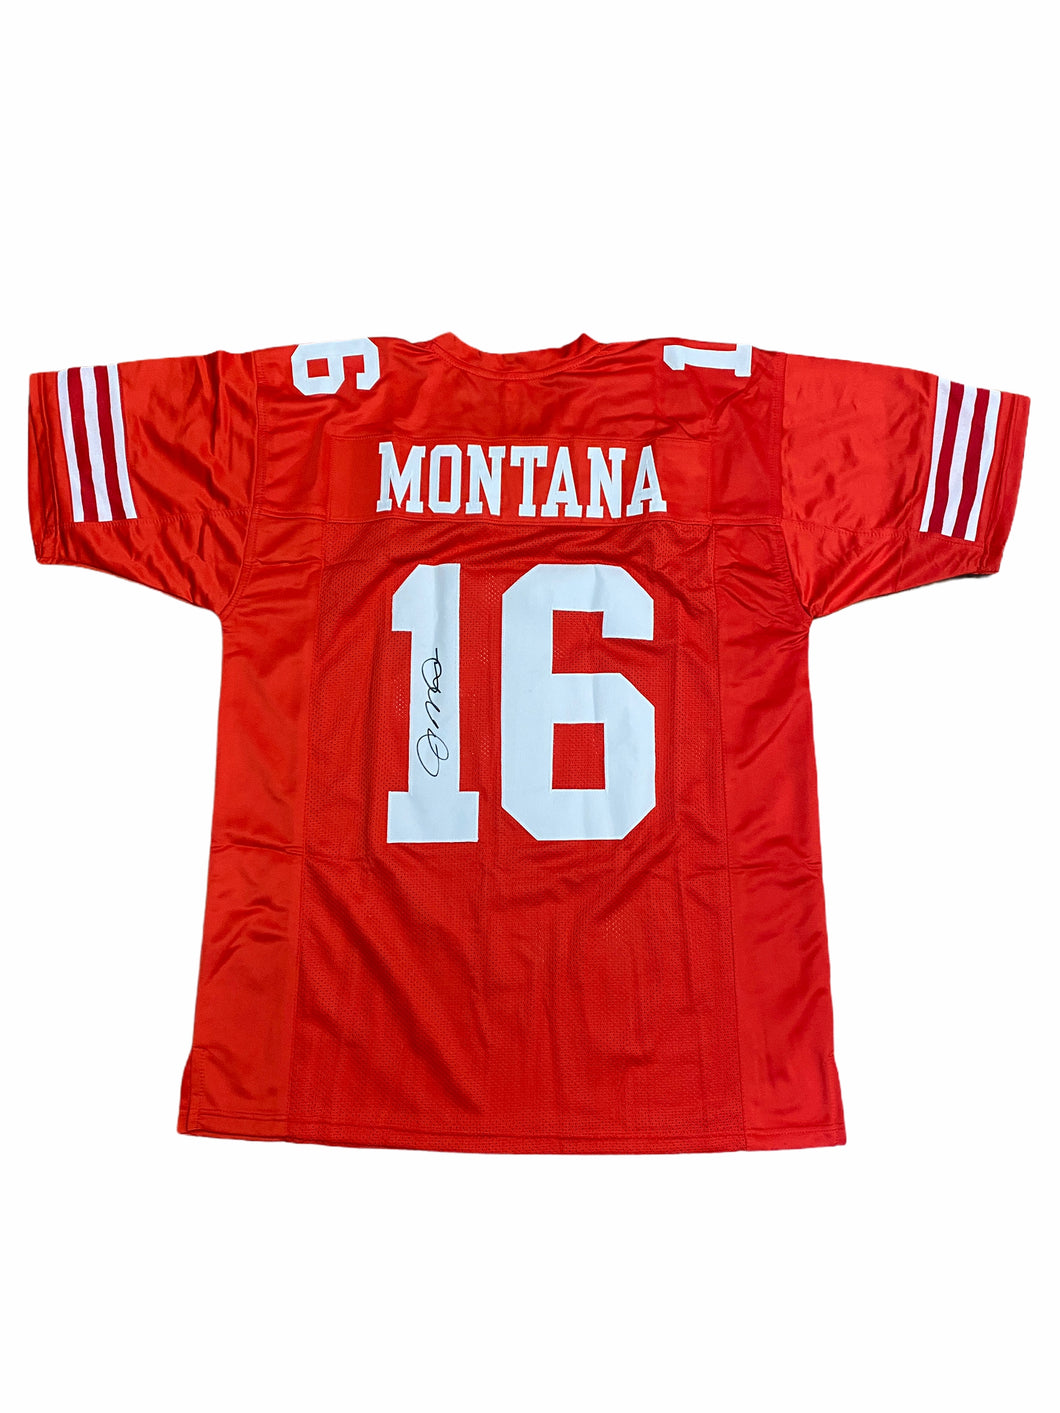 Jersey / 49ers / Joe Montana